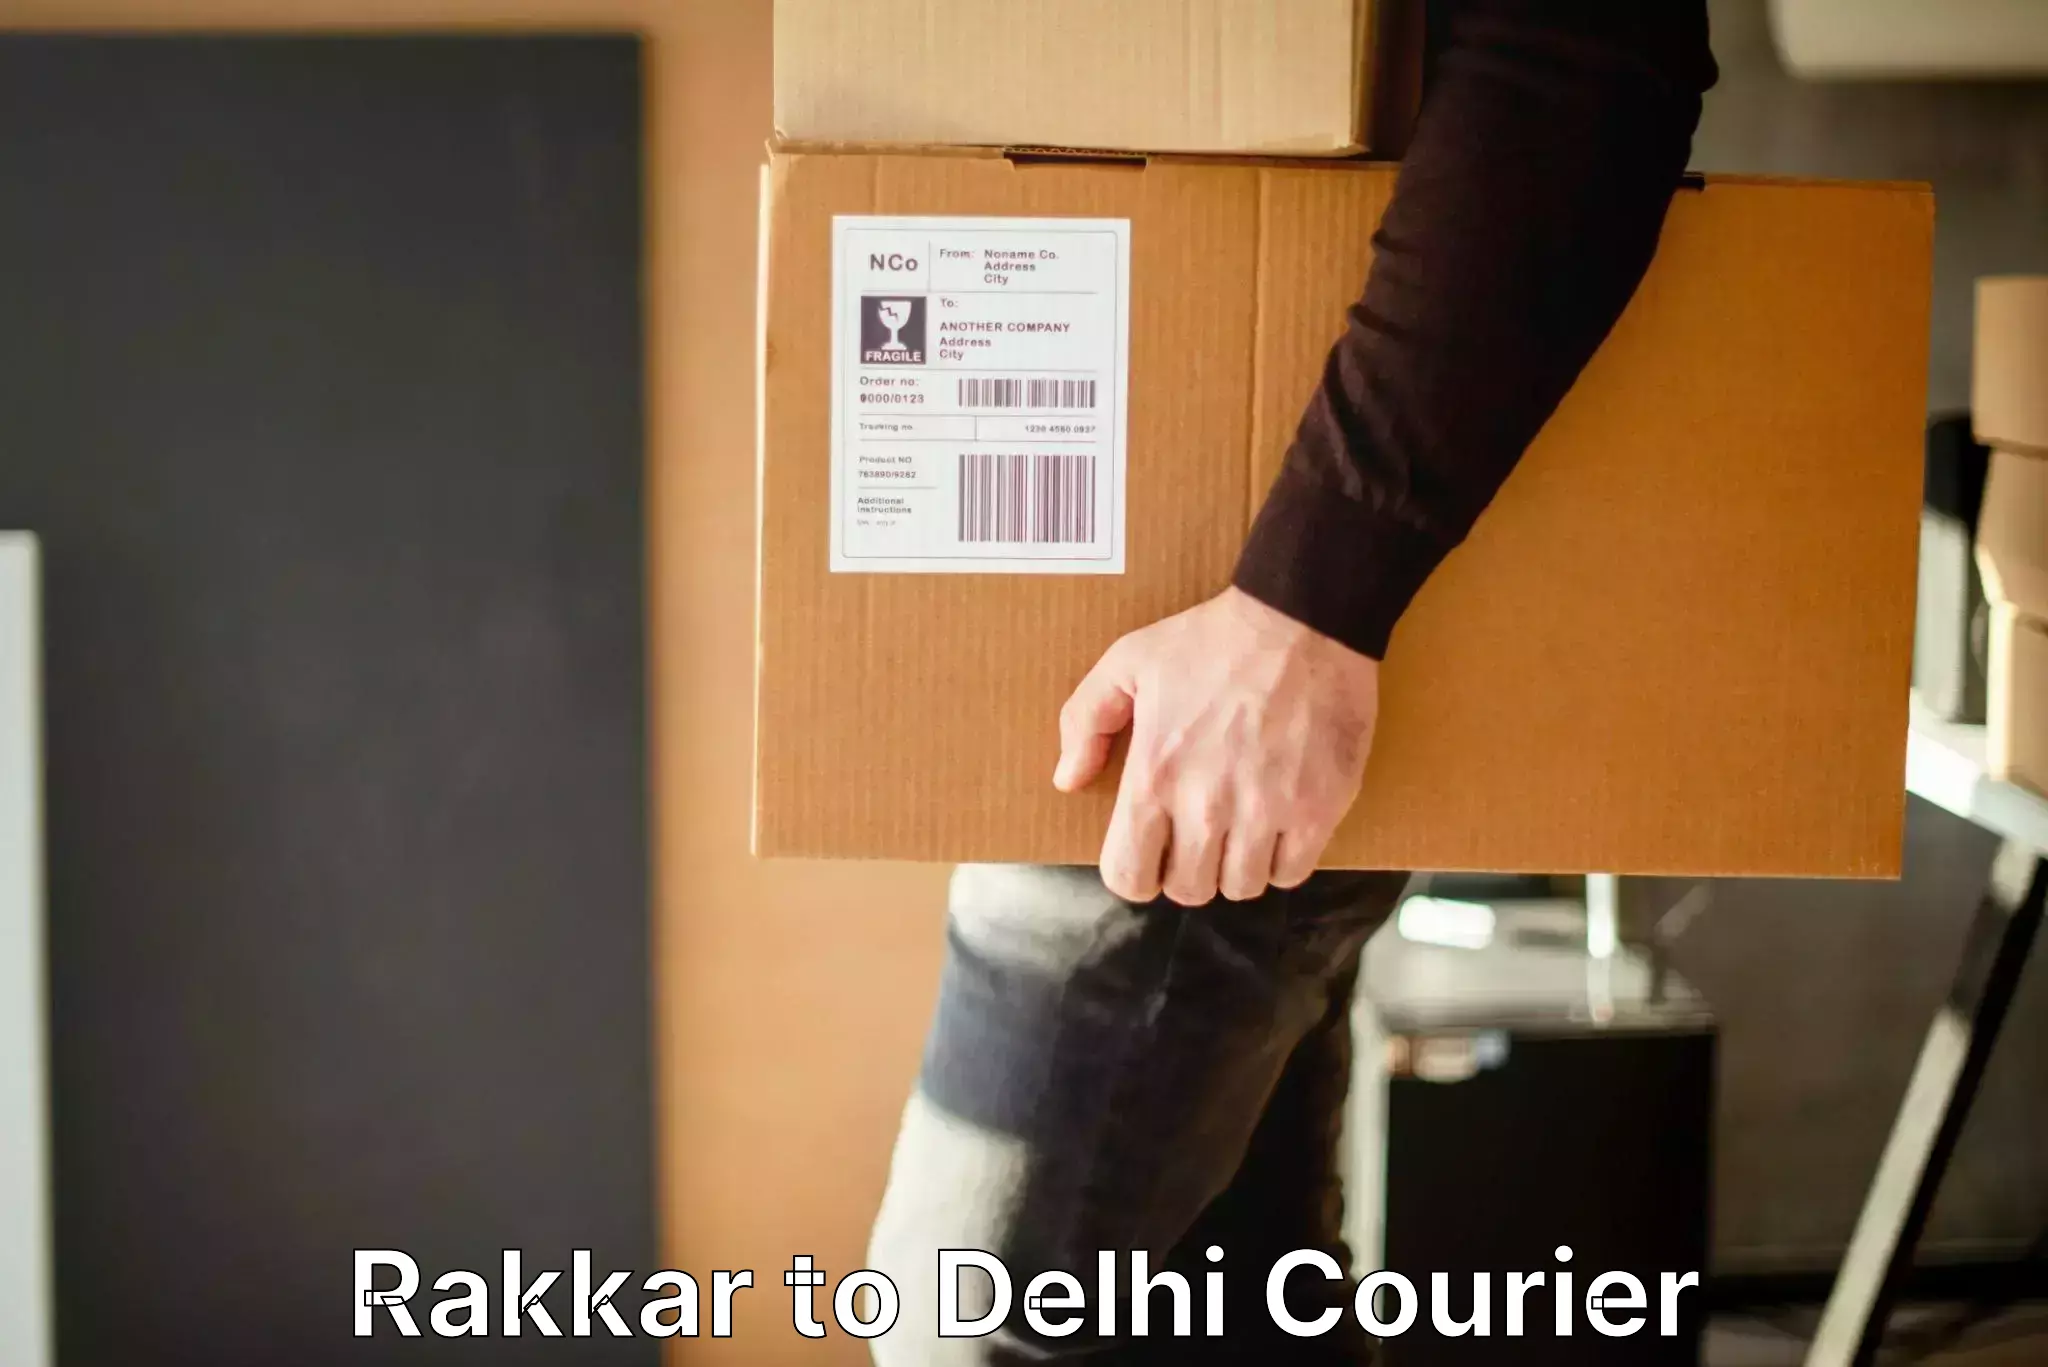 Baggage transport scheduler Rakkar to Delhi